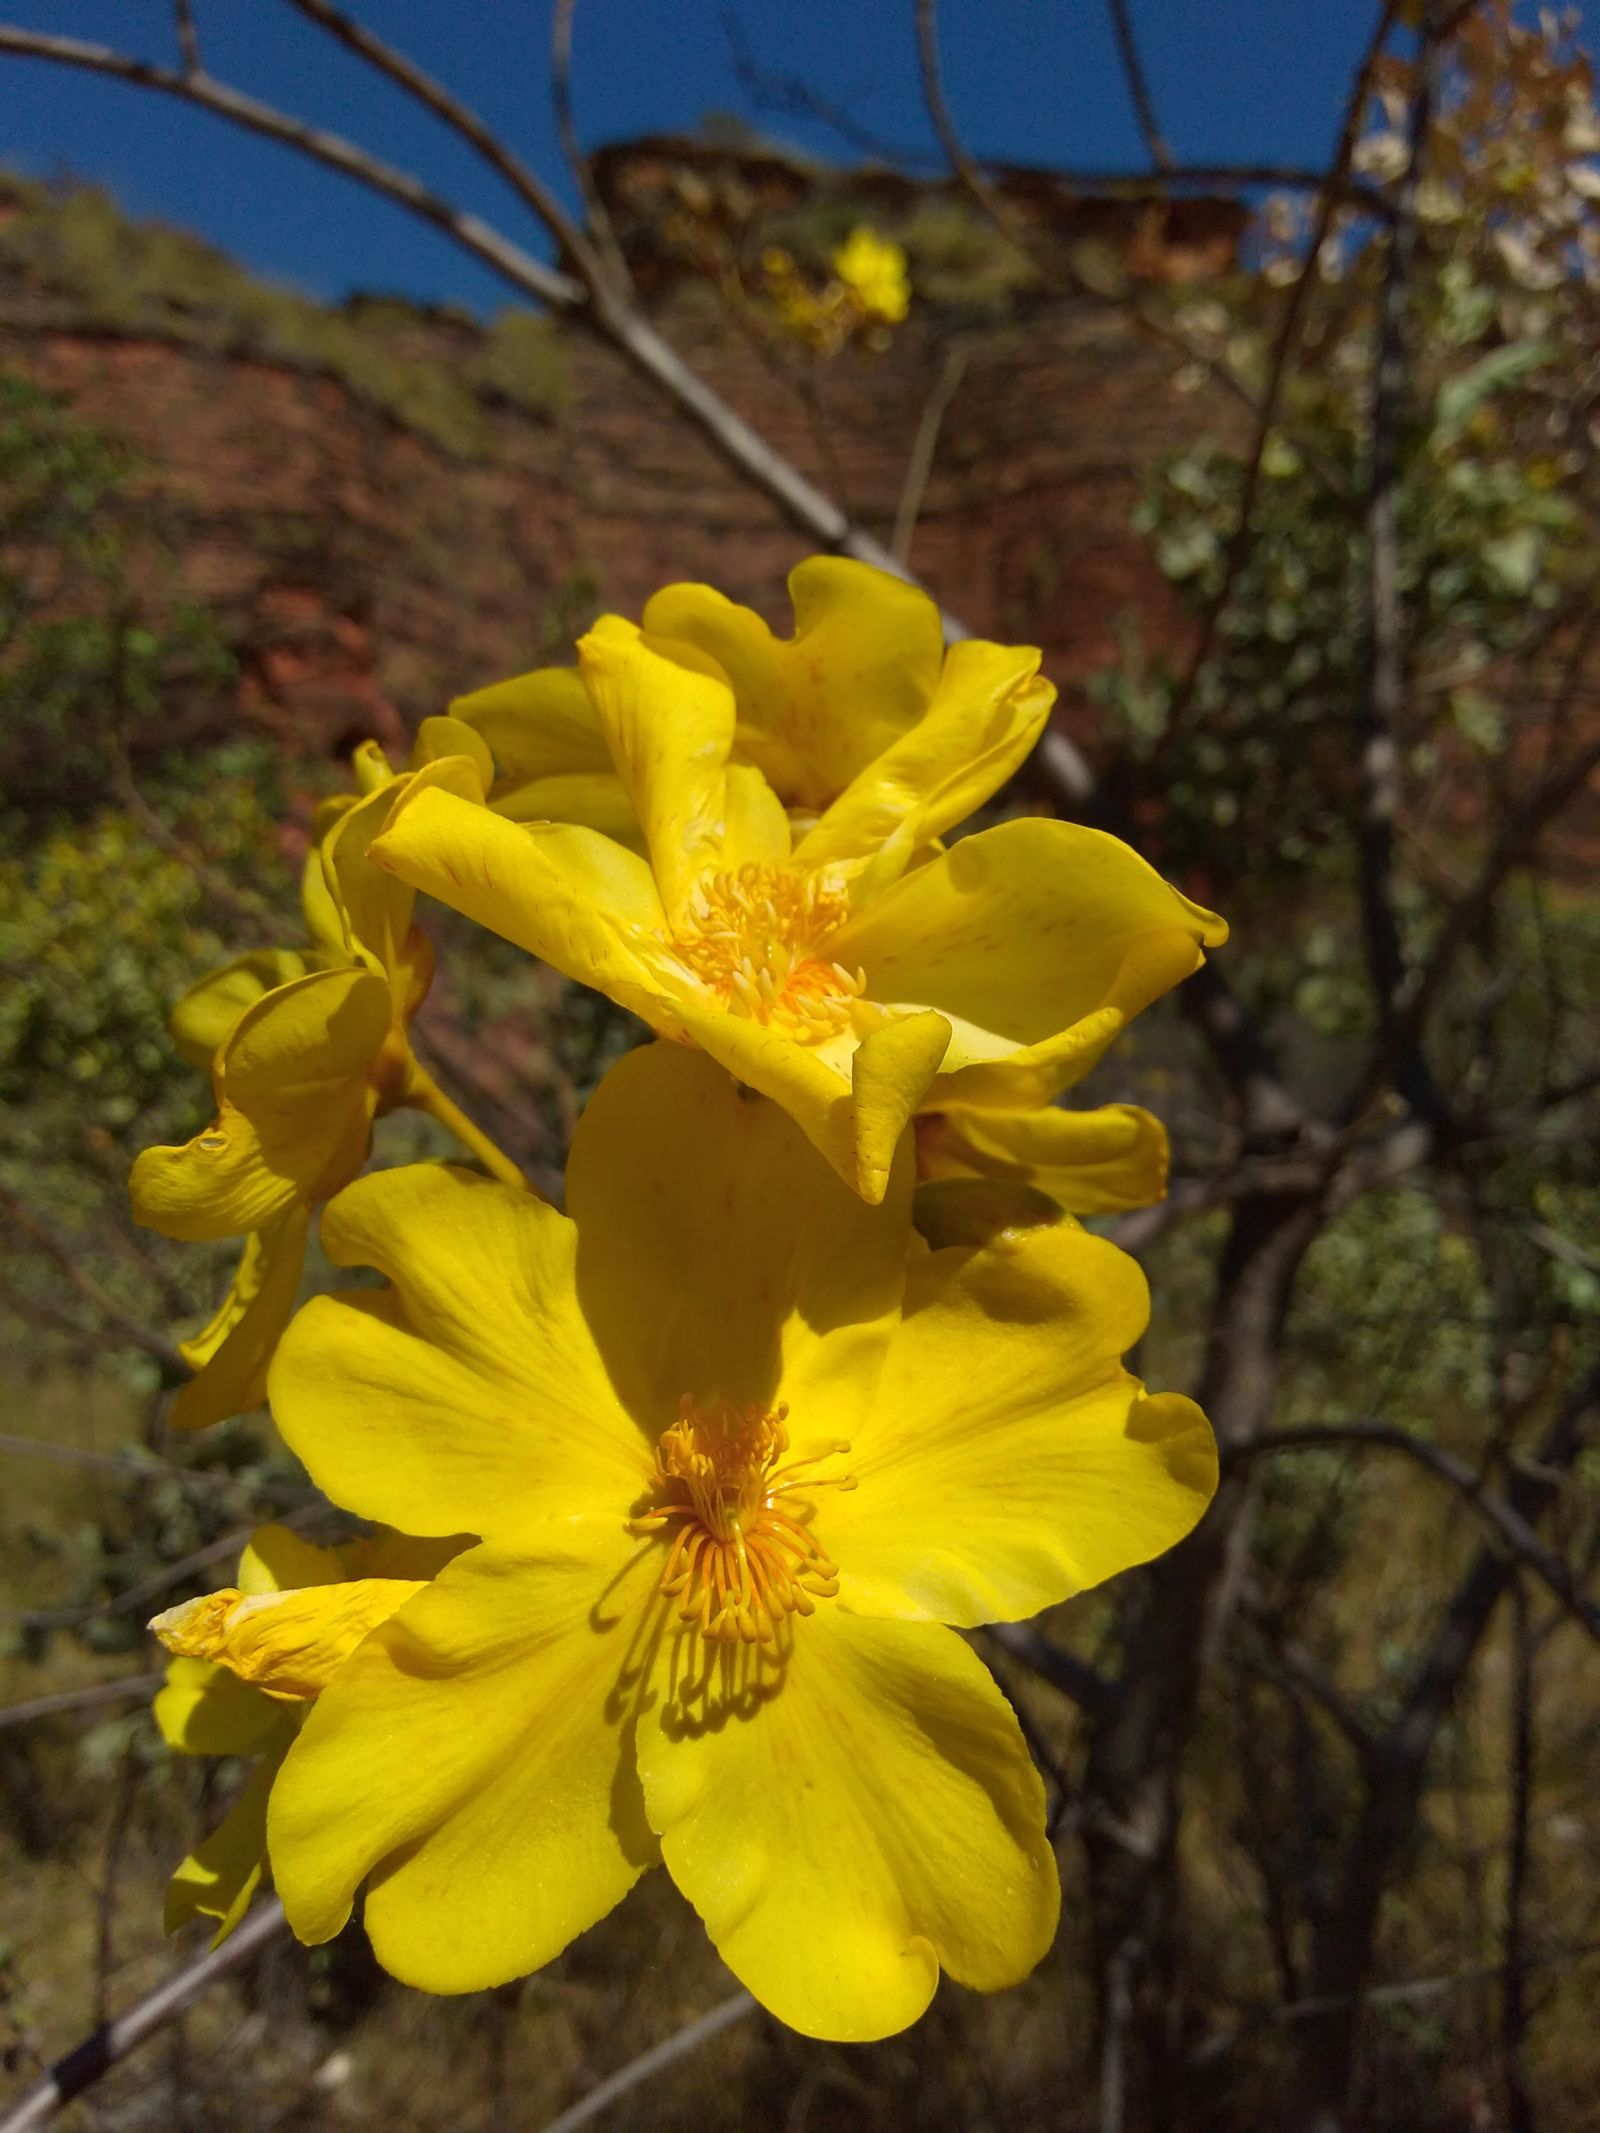  Flower of the Kapok (Cochlospermum gillivarei) in Minima National Park, Kununurra, Western Australia  